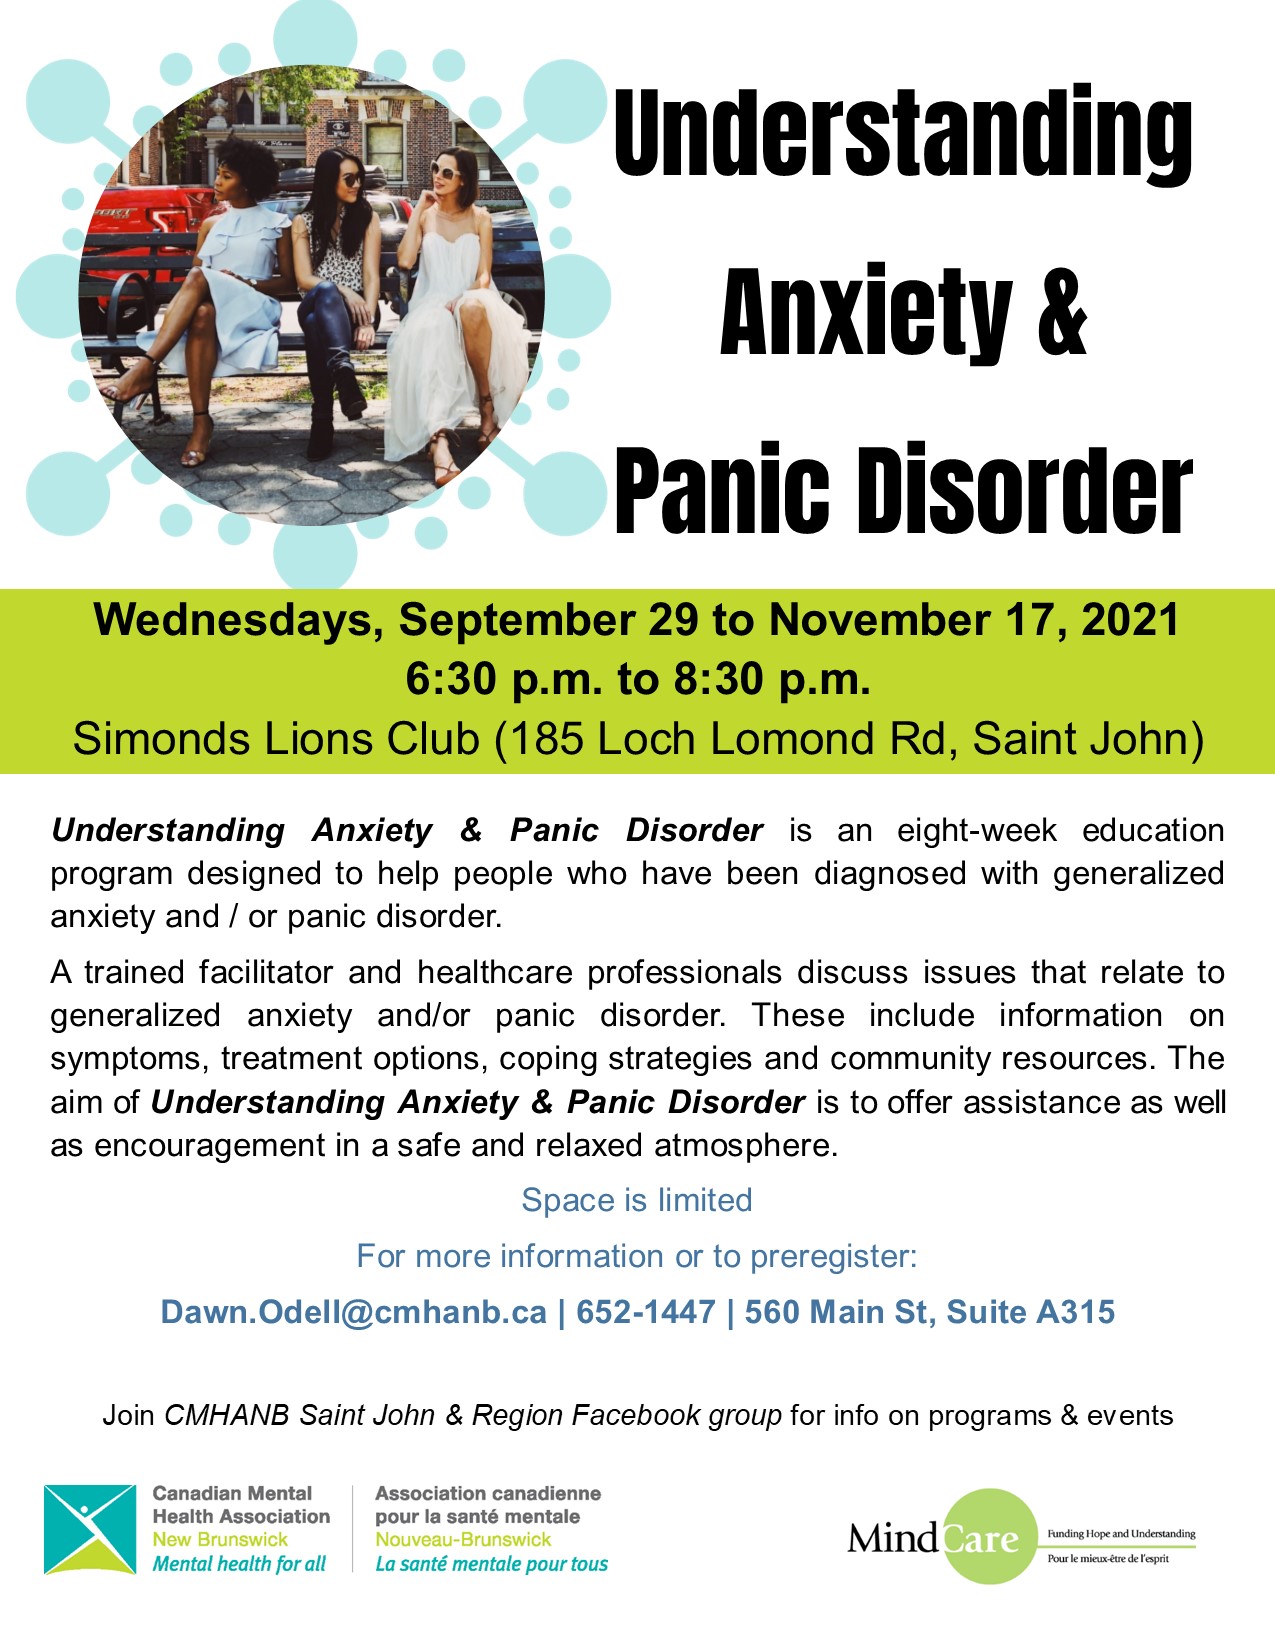 Understanding Anxiety & Panic Disorder (Saint John)